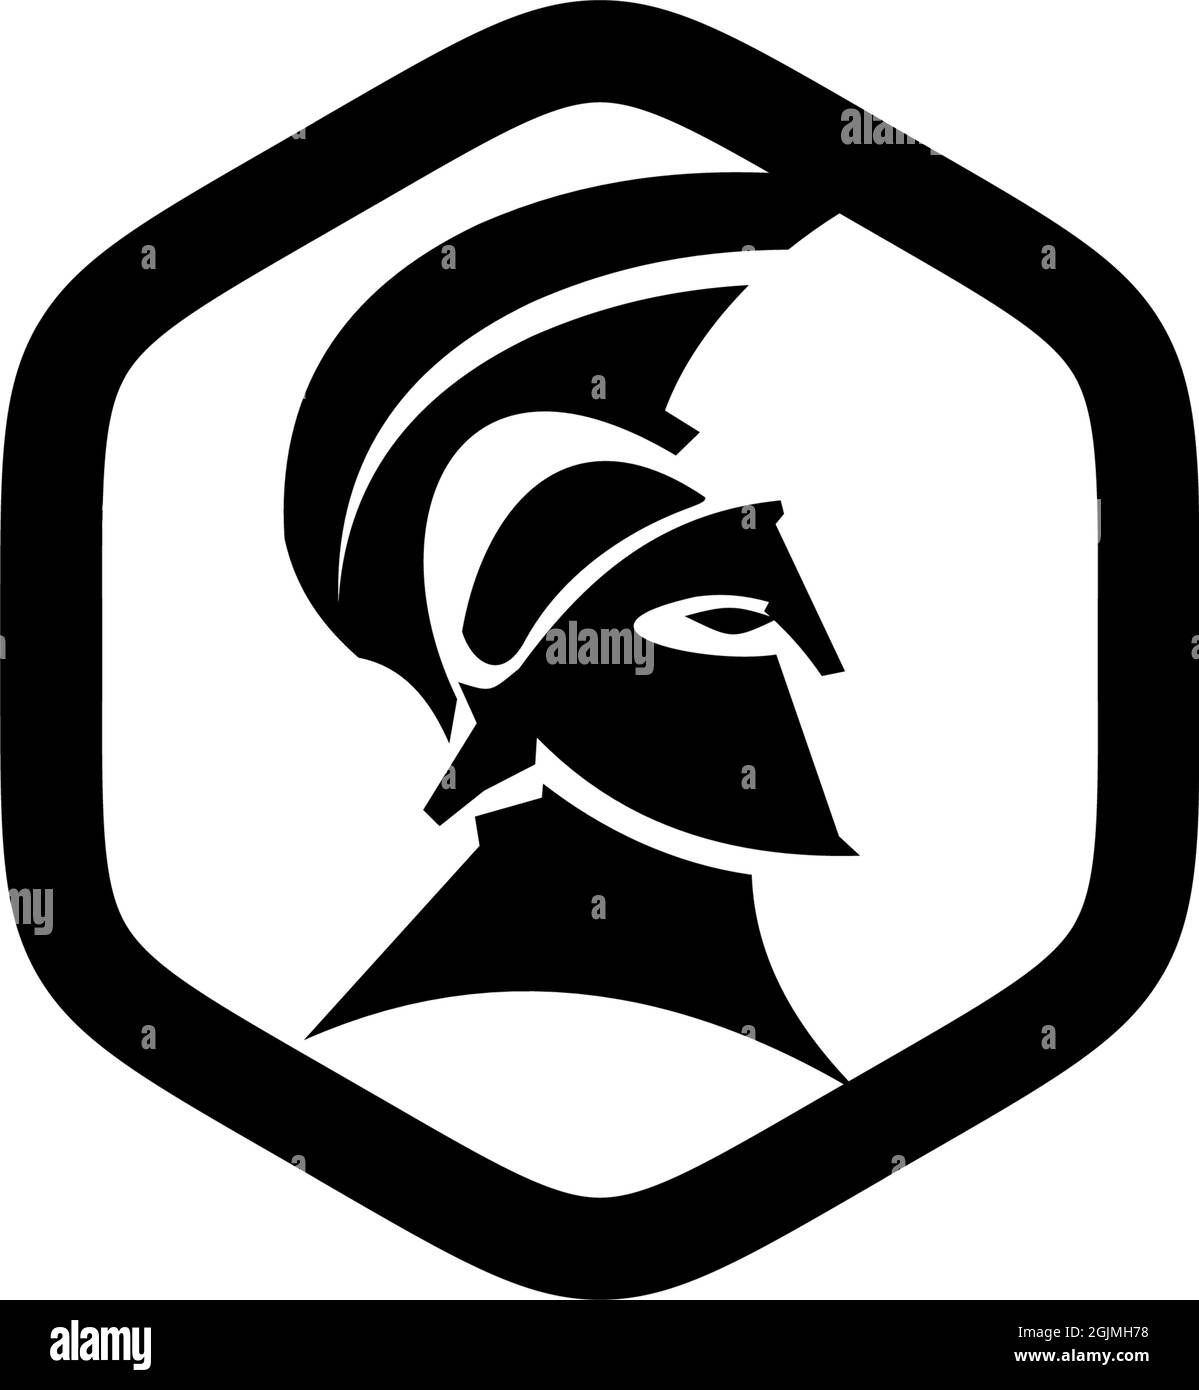 Spartan Krieger Helm Logo Design Vektor Illustration Vorlage Stock Vektor